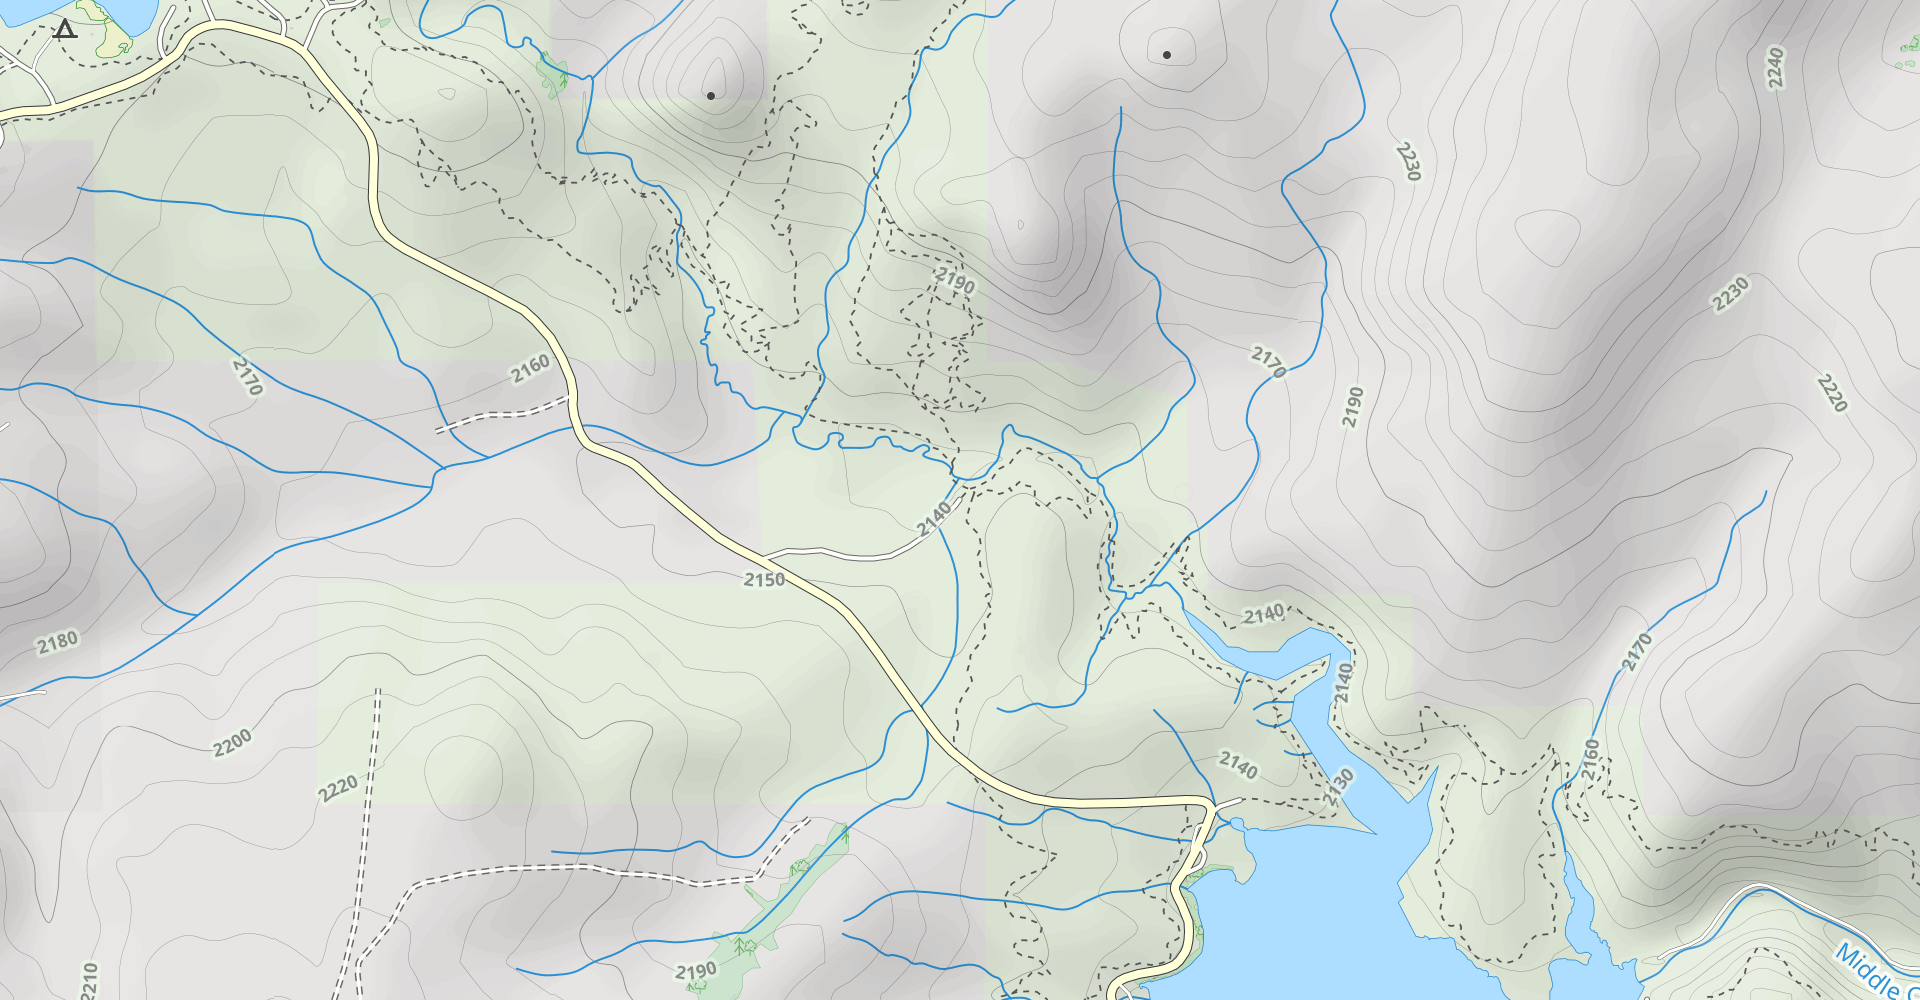 Middle Kingdom Trail and Mahogany Trail